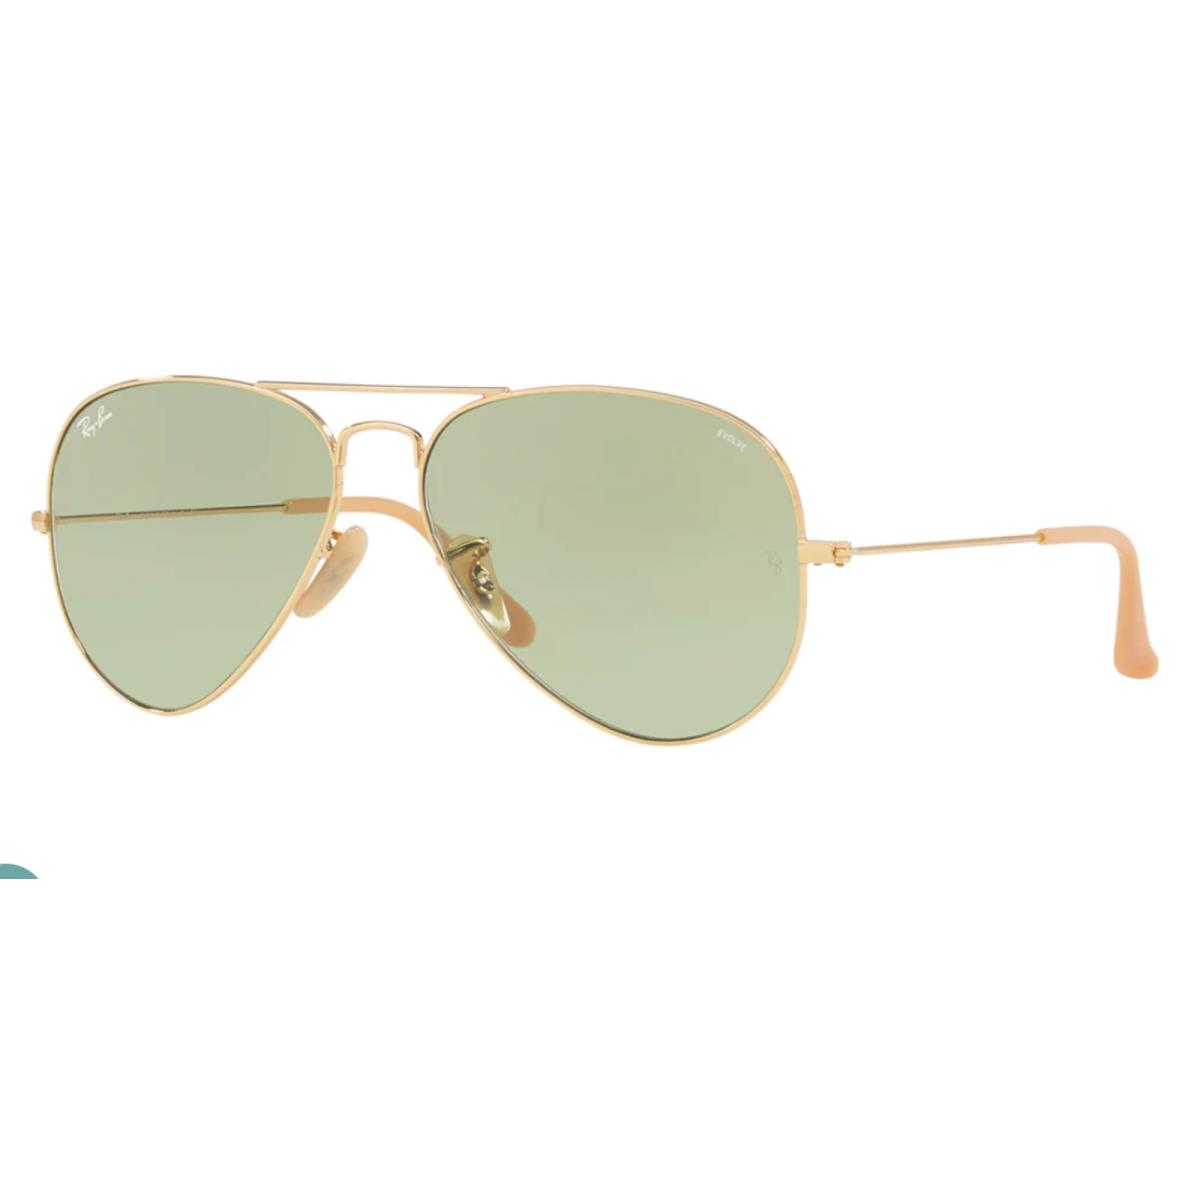 Ray-ban Aviator Evolve Green Photochromic Sunglasses RB 3025 9064/4C Gold Frames